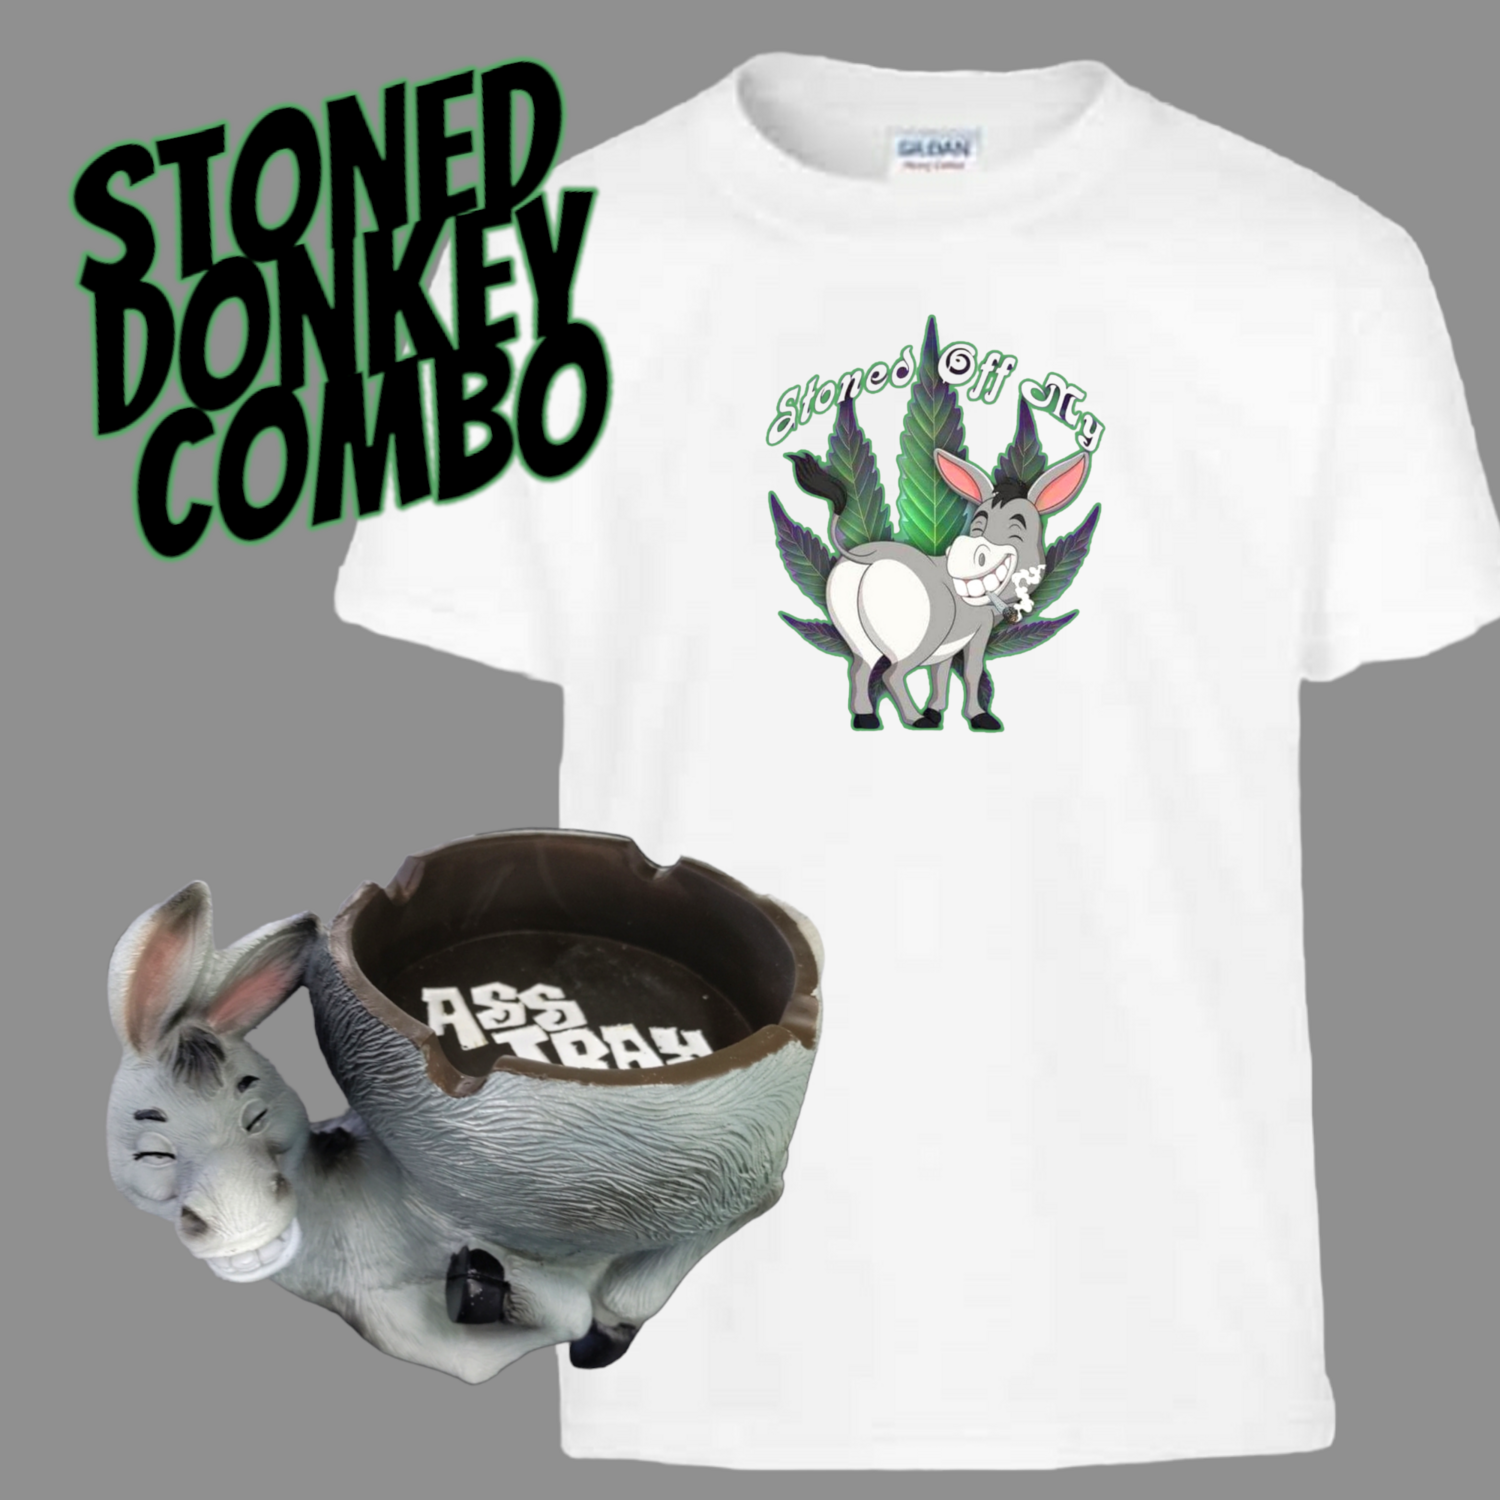 Stoned Donkey Combo T-shirt and Ashtray